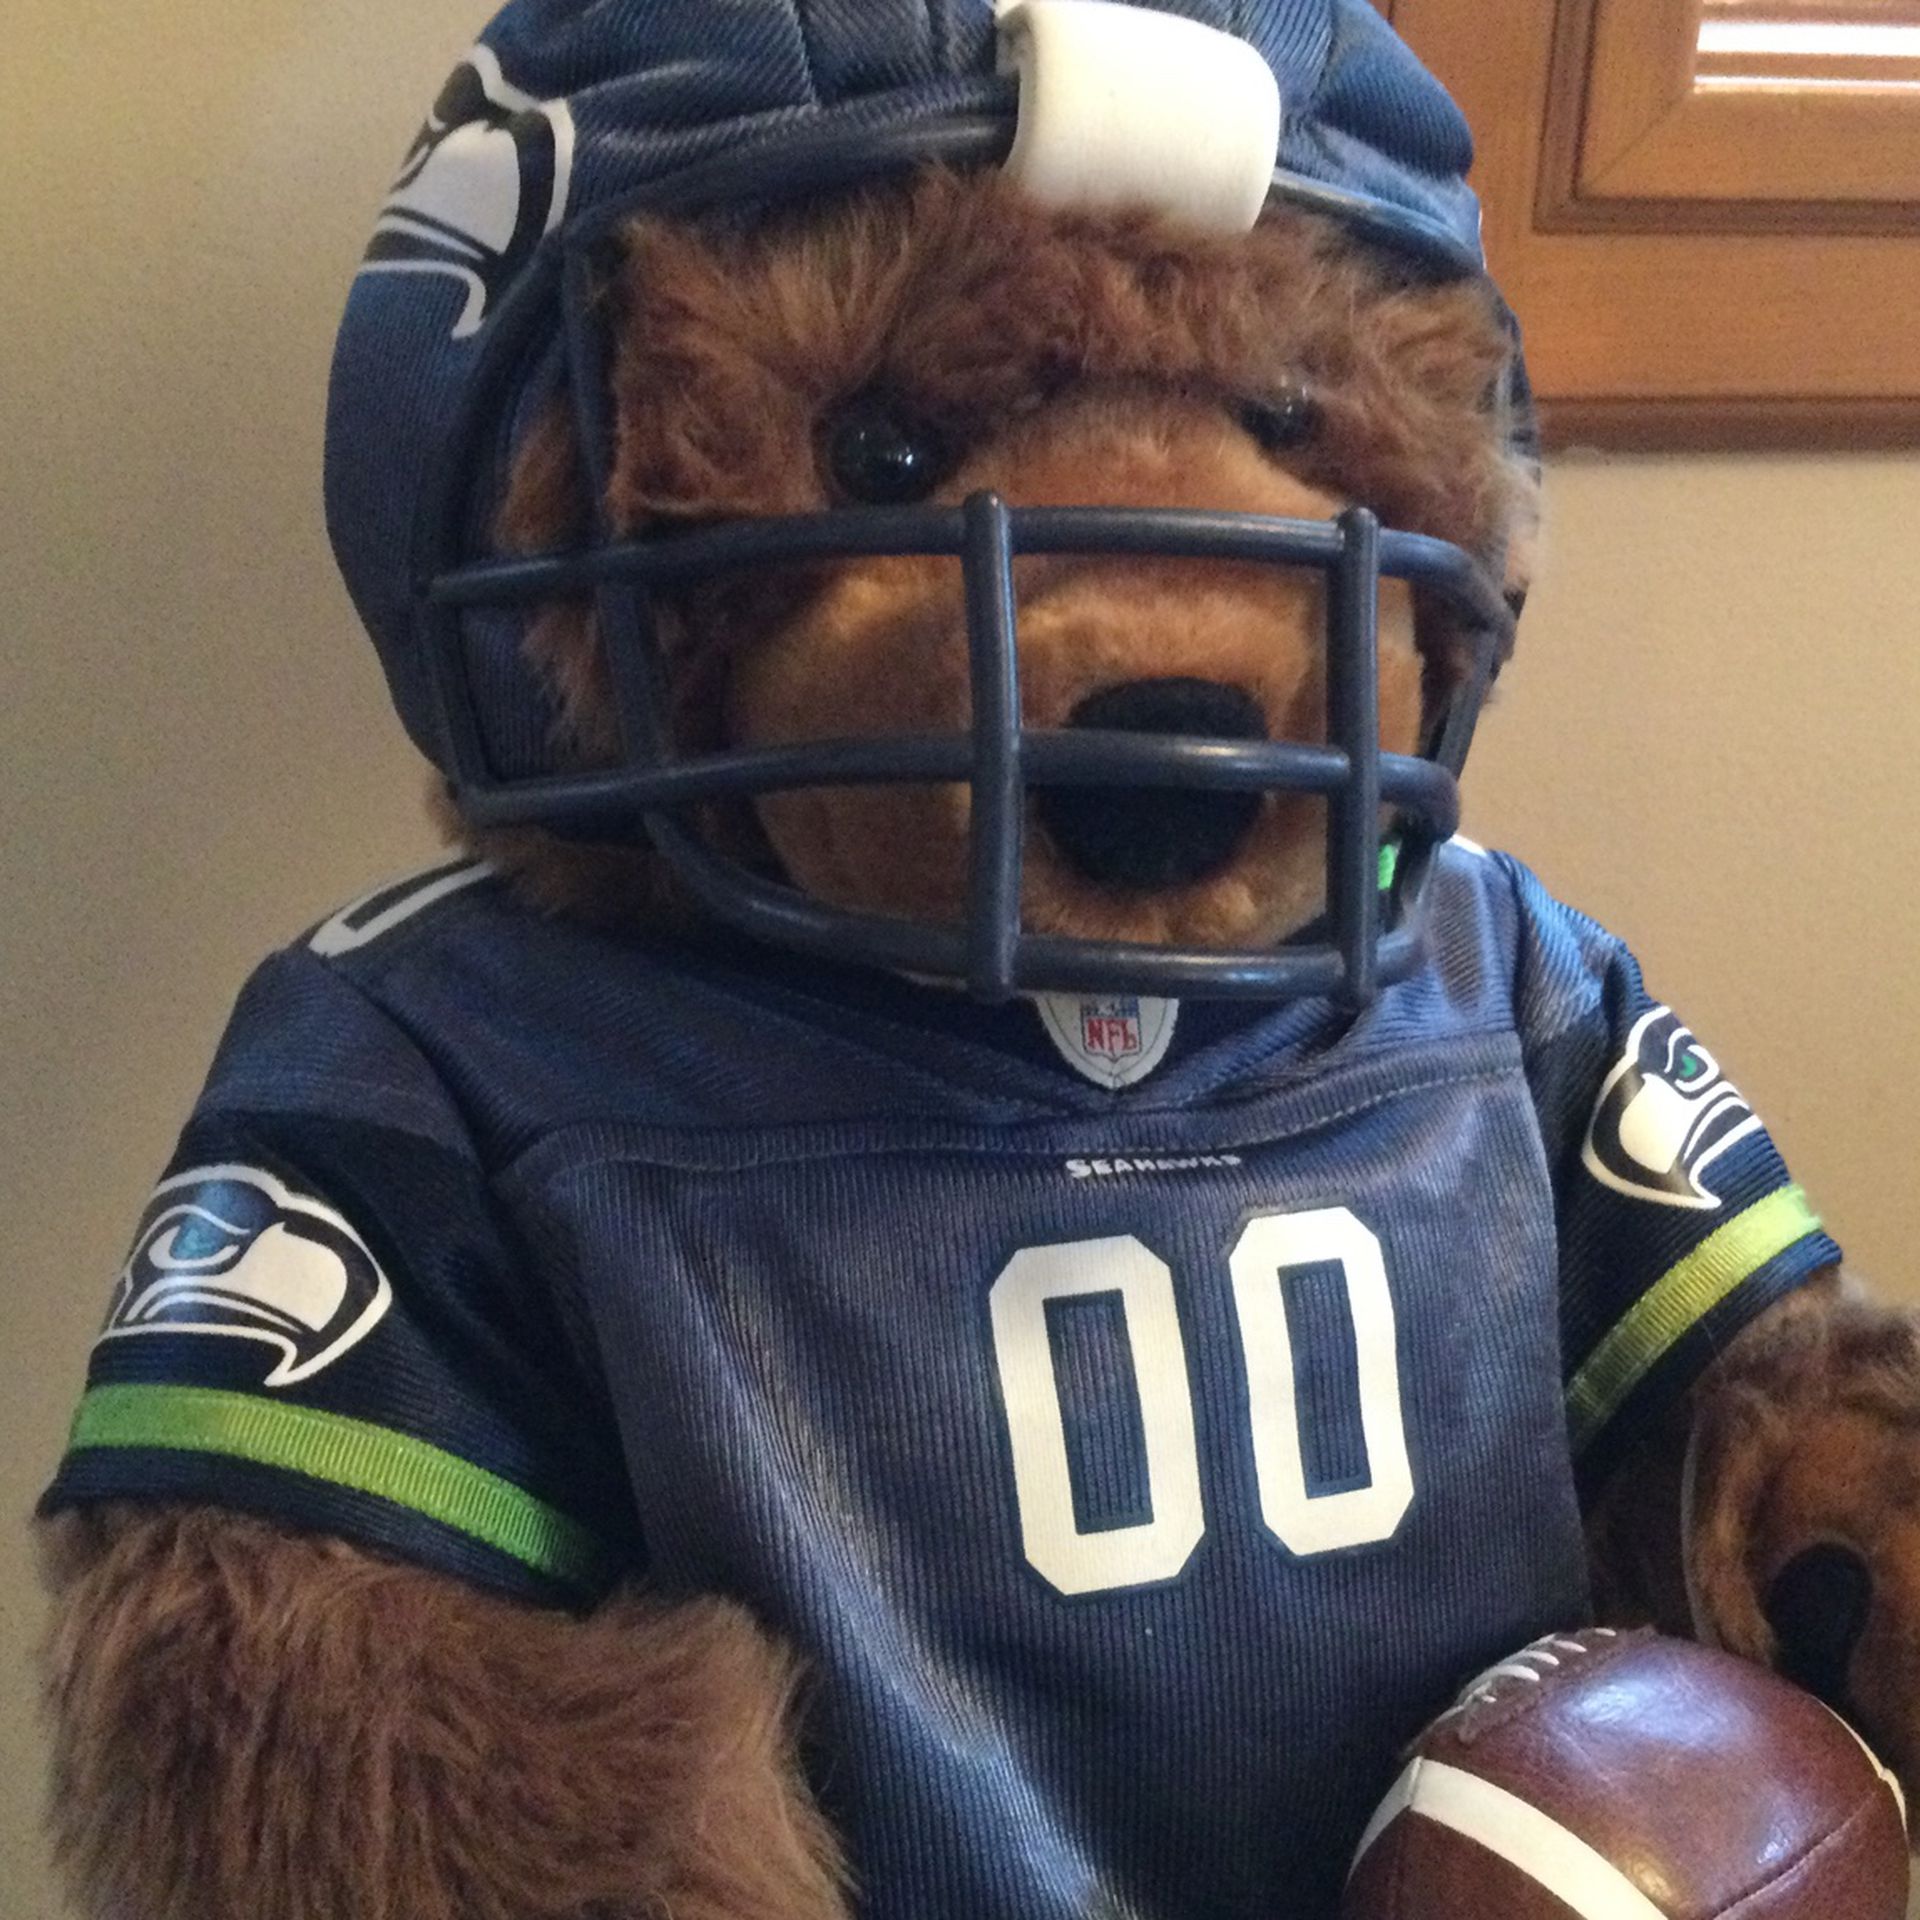 Official NFL SEAHAWKS Build A Bear Teddy With Complete Uniform, Football